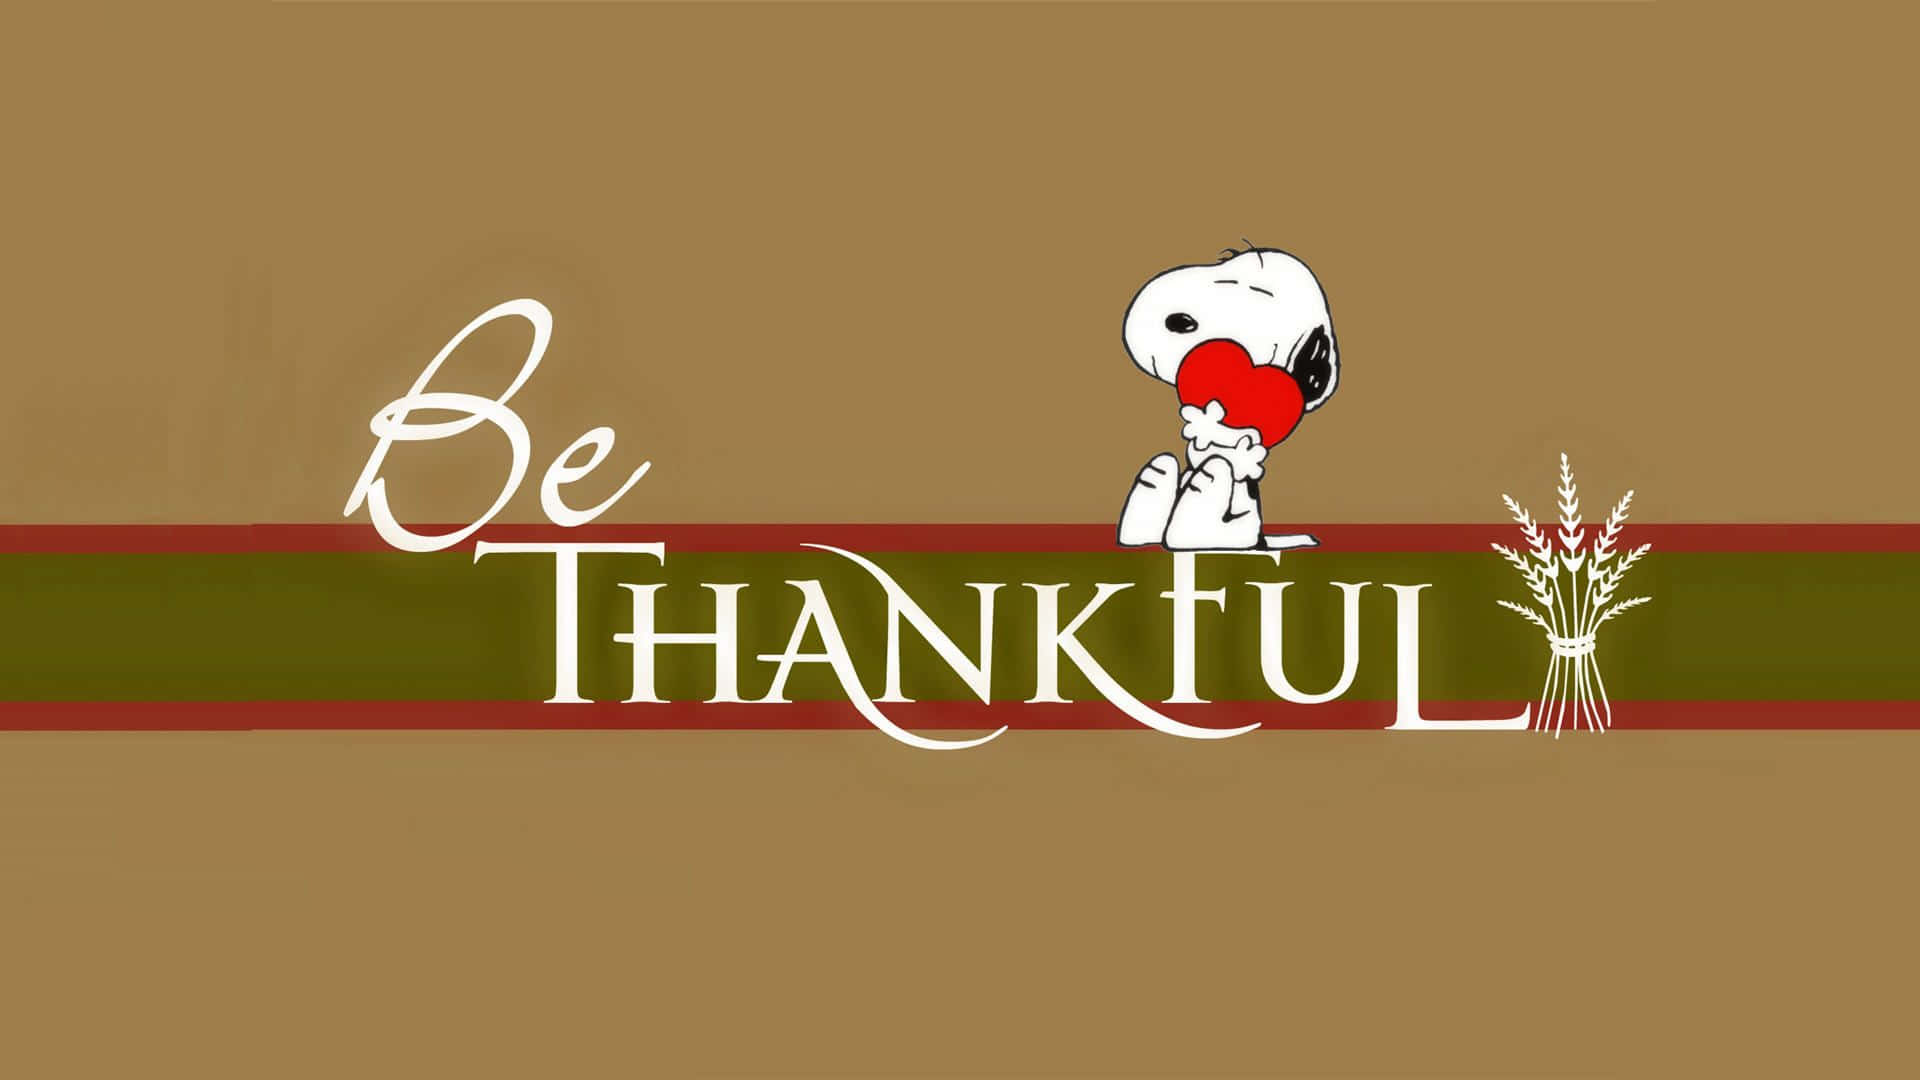 Snoopy fejrer Thanksgiving med Charlie Brown. Wallpaper